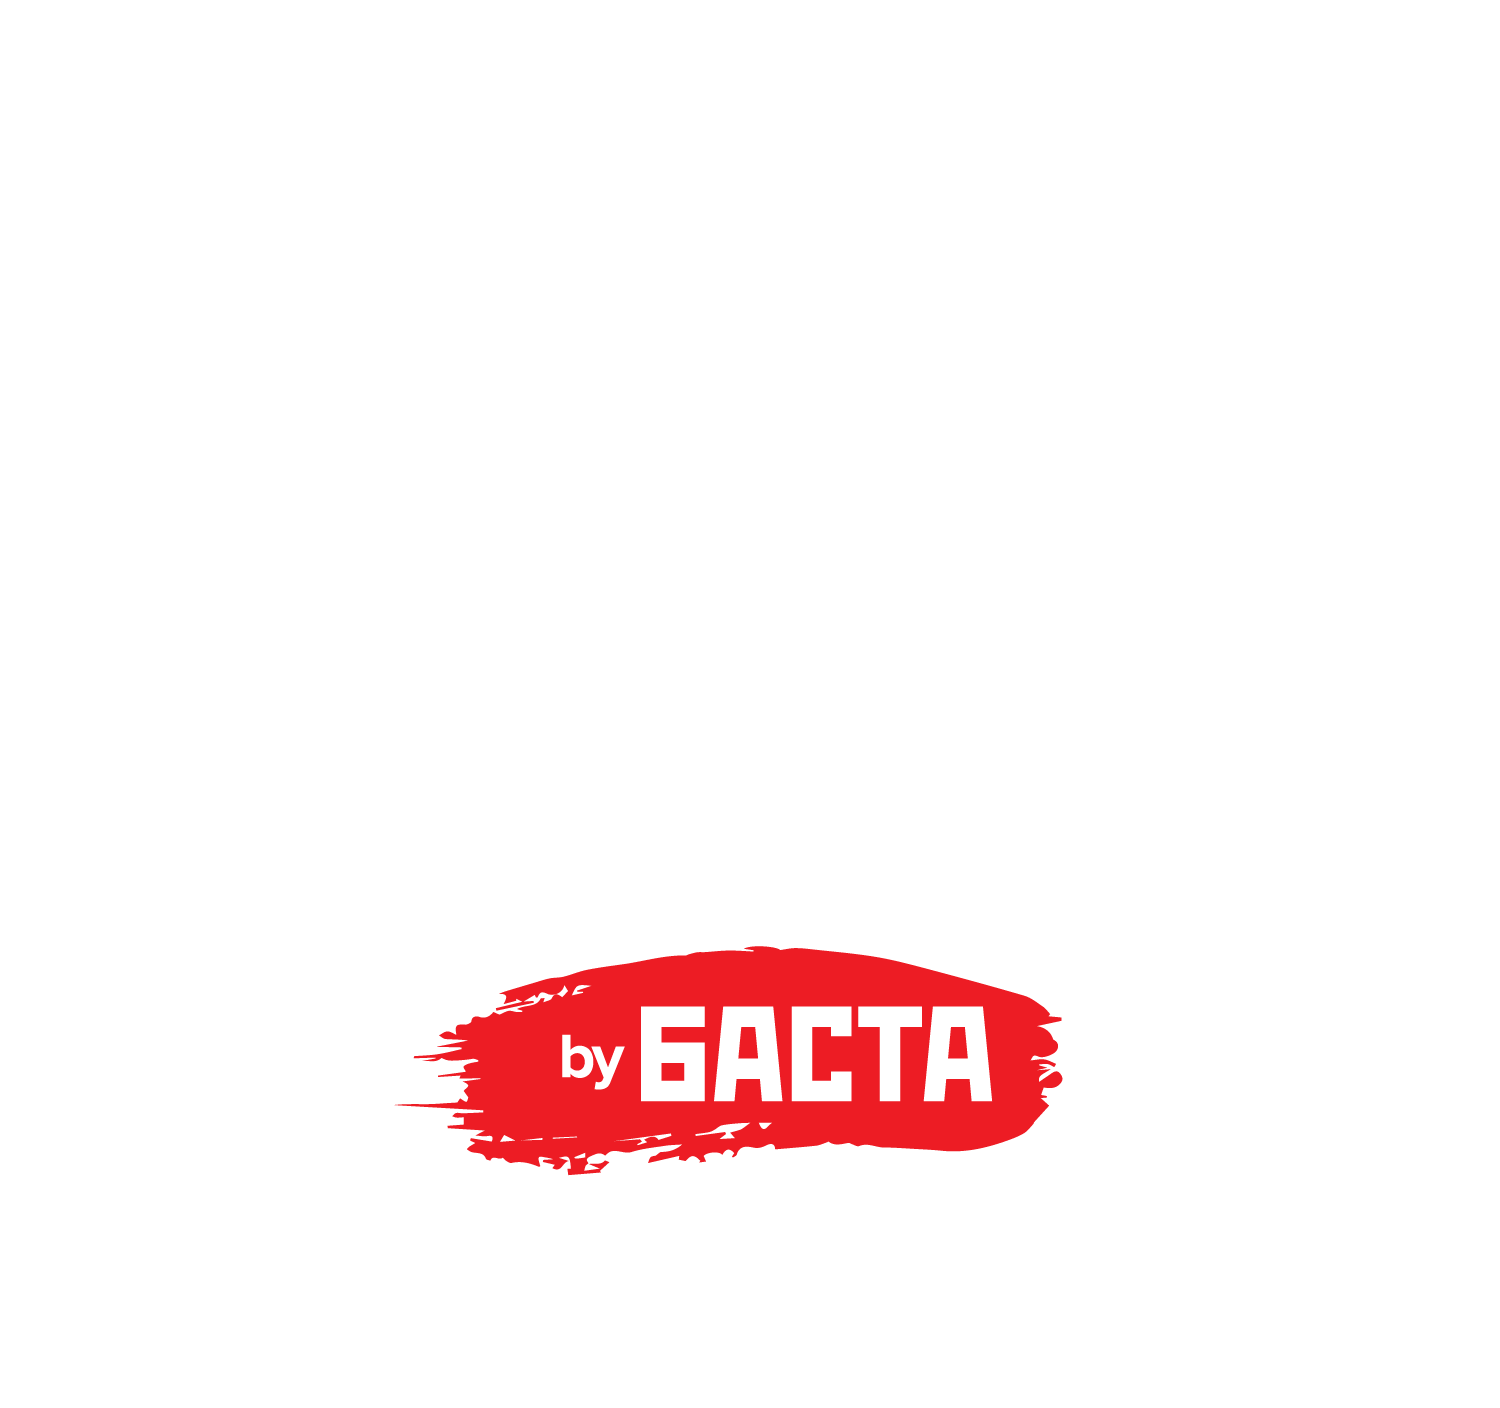 Френд бай баста. Фрэнк Баста. Frank basta лого. Фрэнк бай Баста. Ресторан Франк бай Баста.